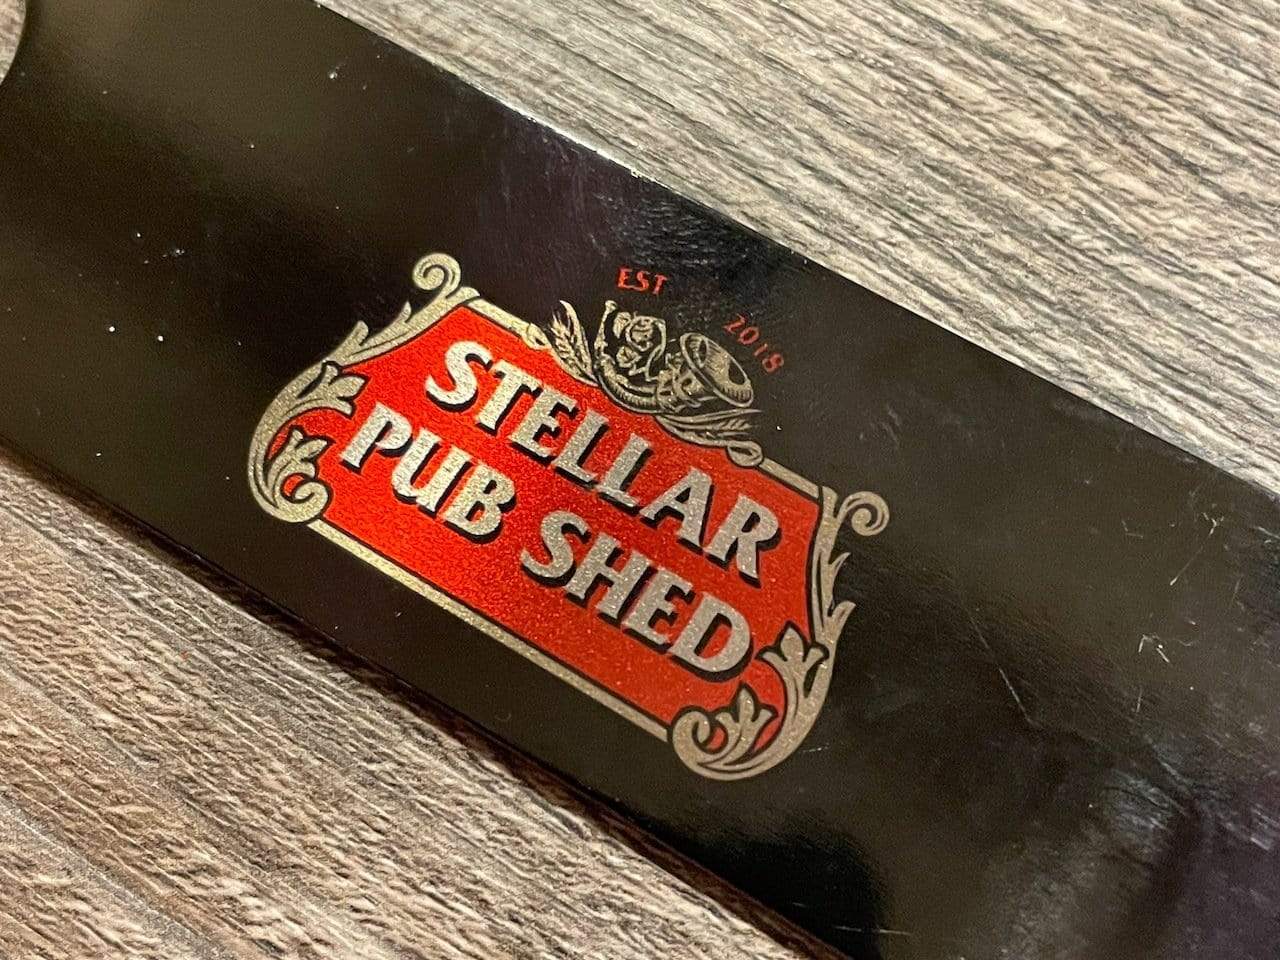 Stella Pub Shed Bottle Opener Raise the Bar Print and Design - Raise the Bar